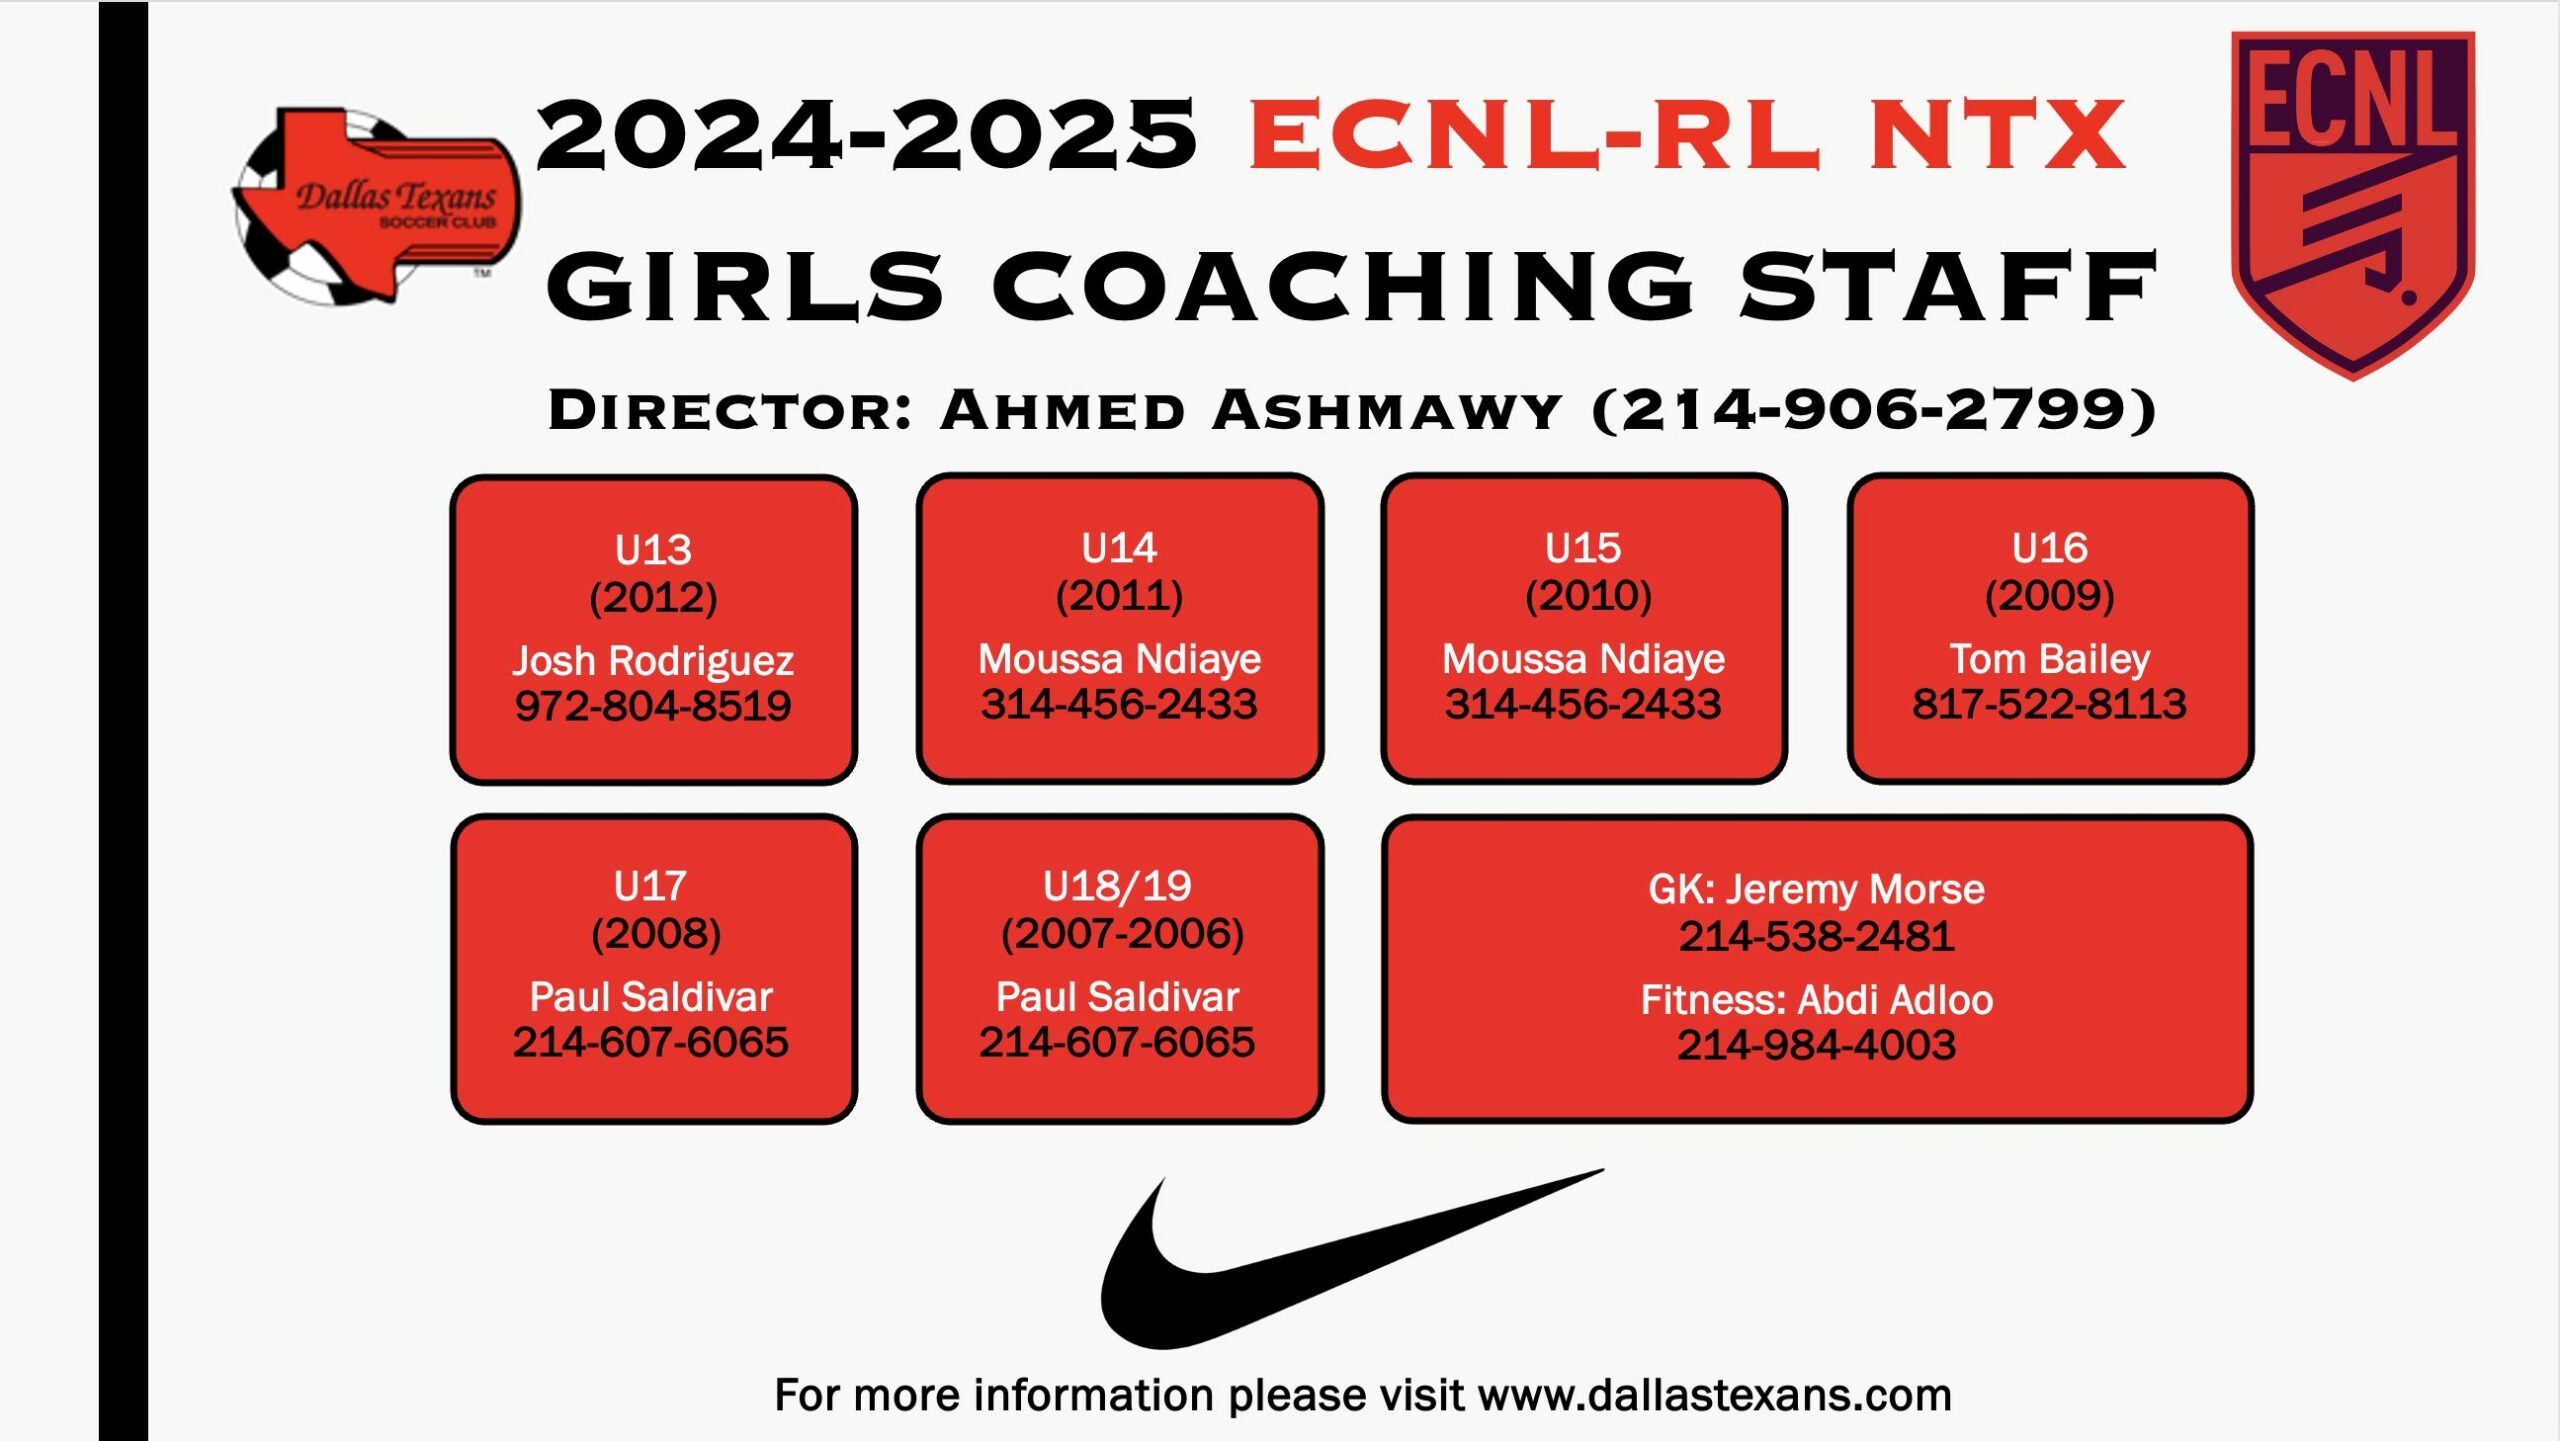 Girls ECNL-RL NTX